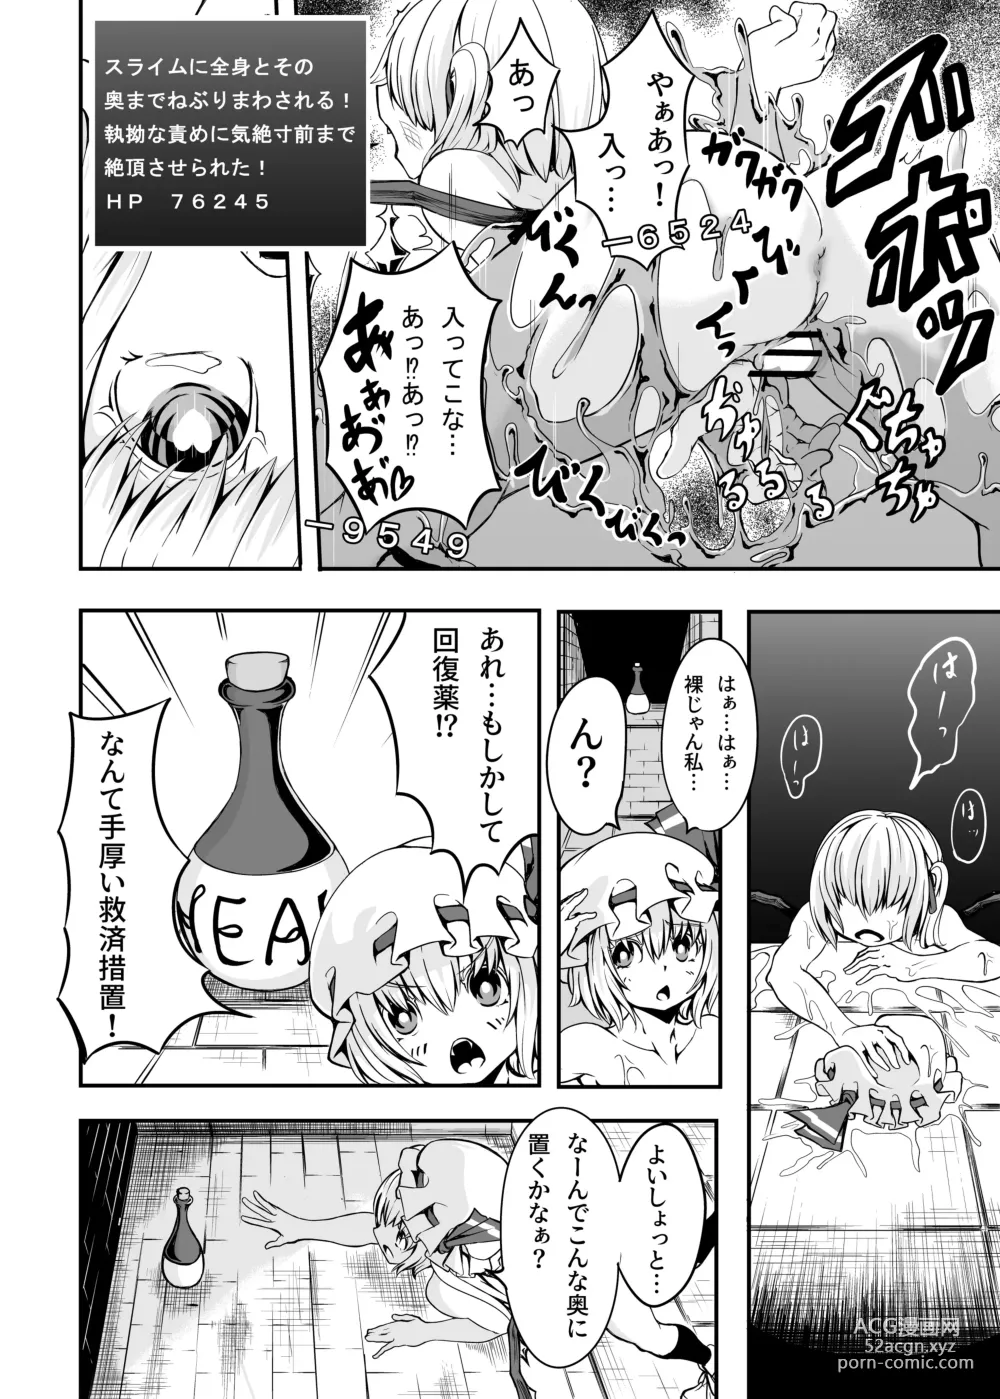 Page 9 of doujinshi Flan-chan and ETD